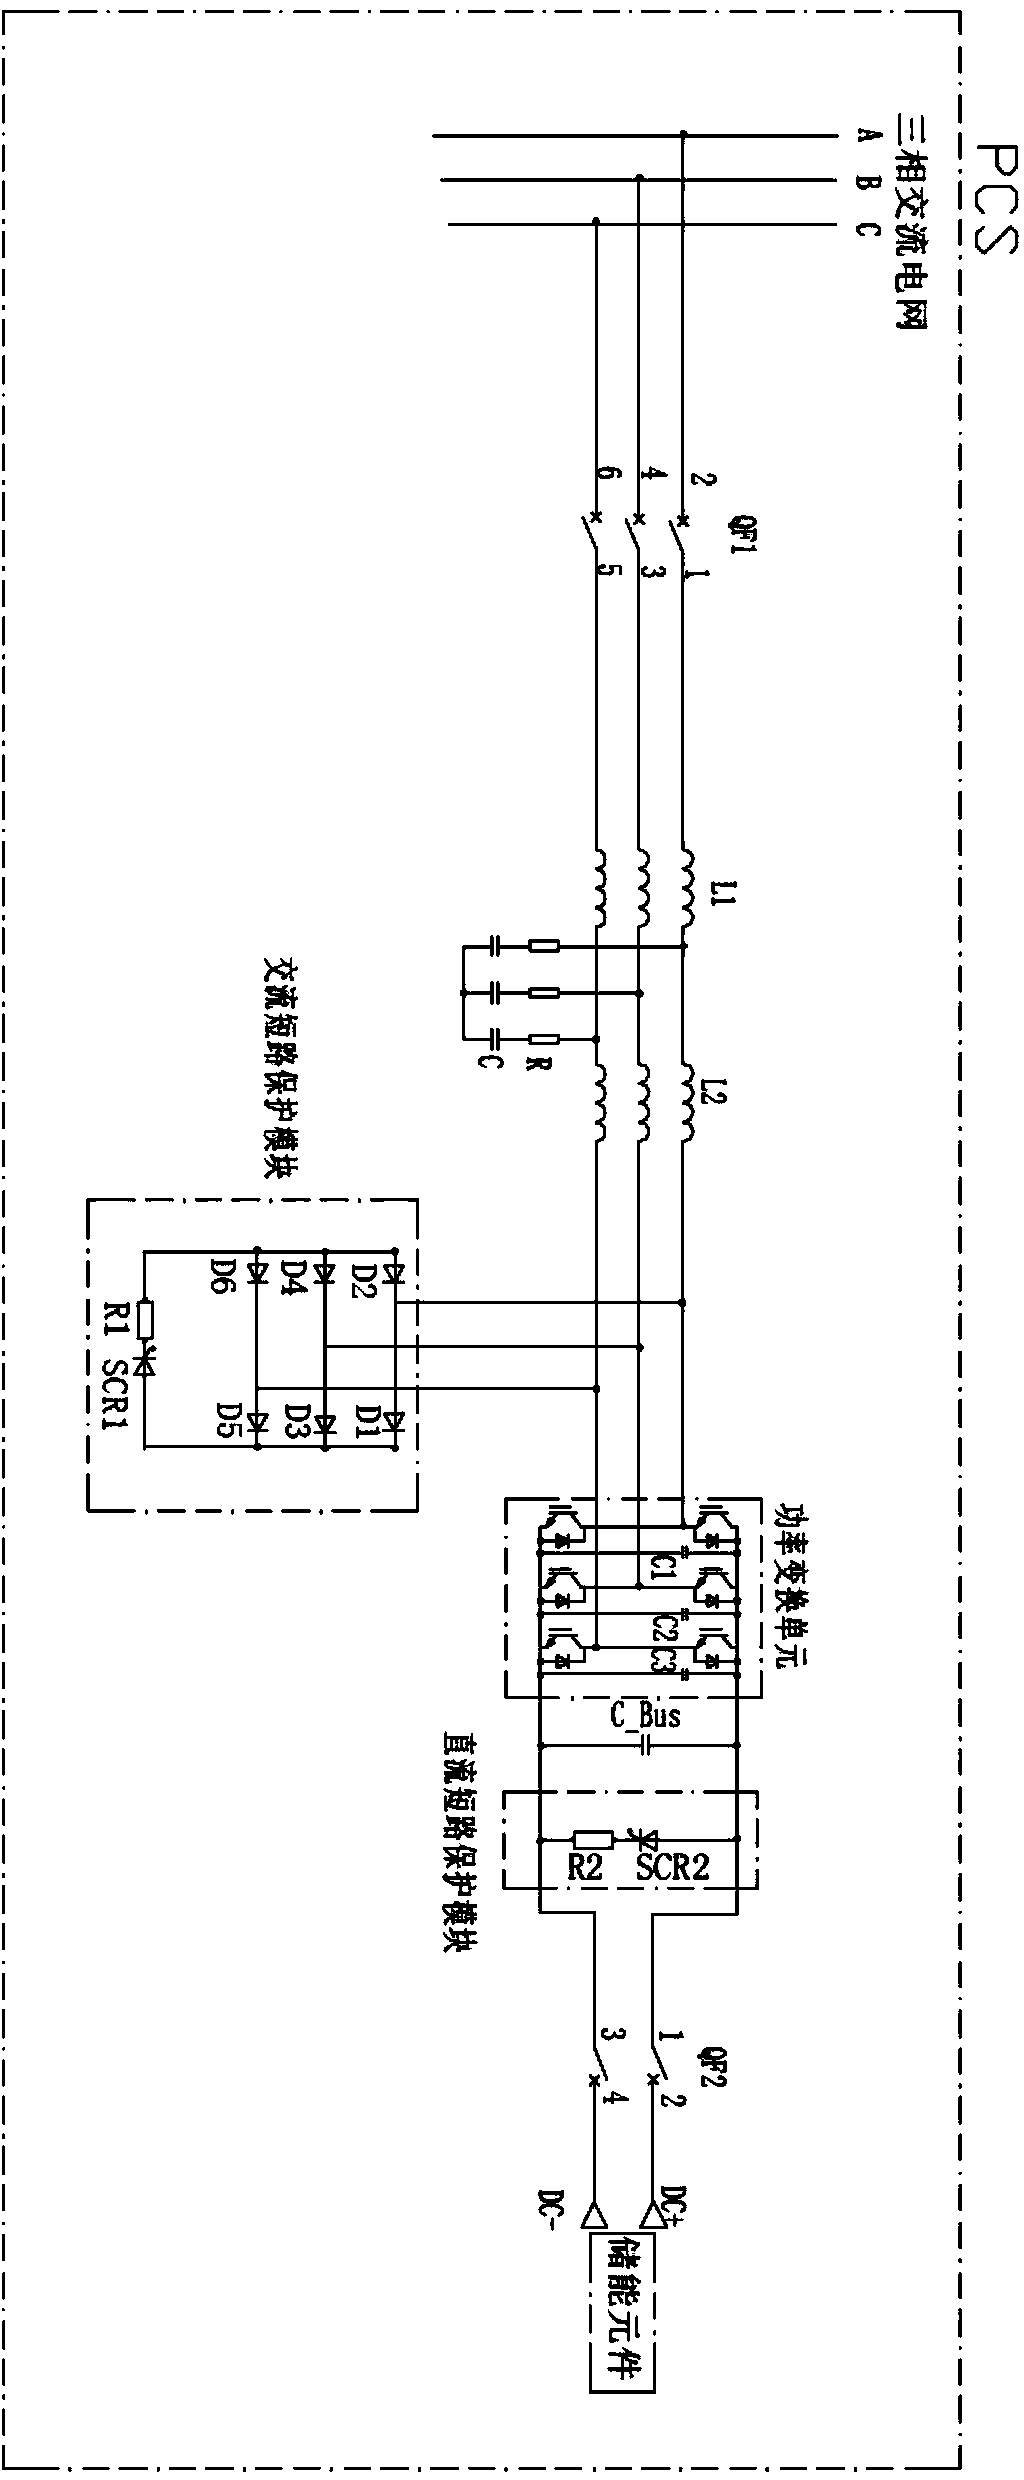 Short-circuit protection system of energy-storage bidirectional converter